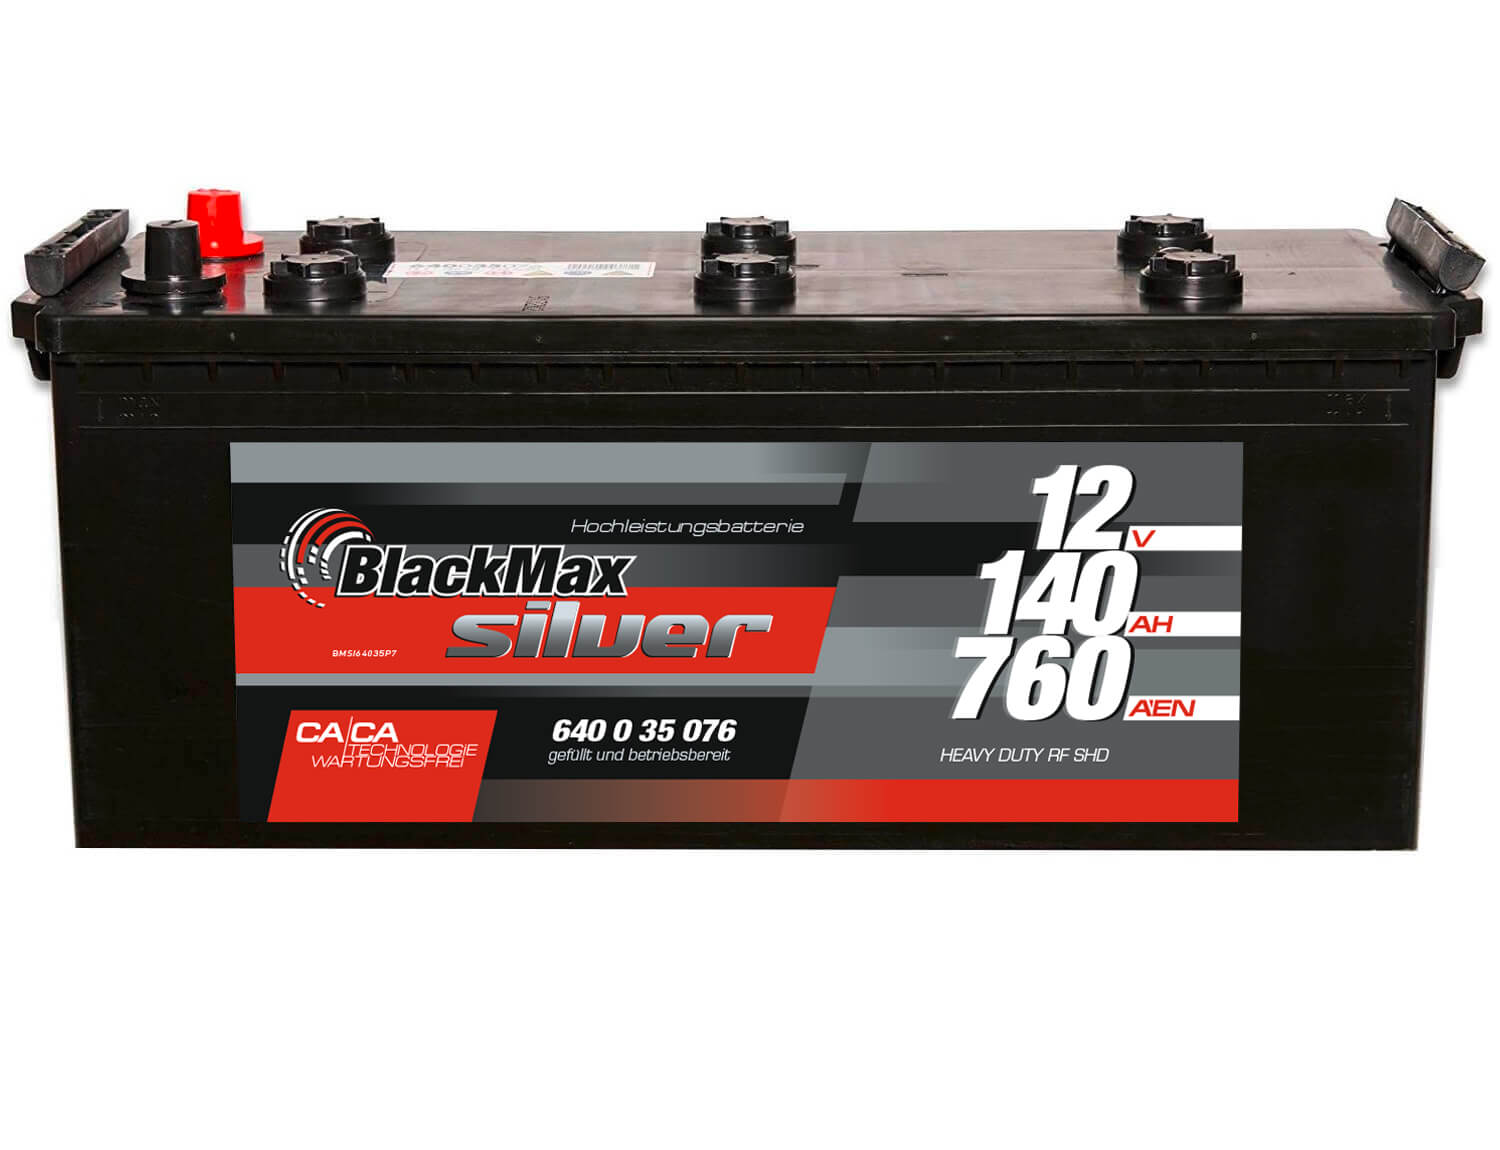 BlackMax Silver 64035 12V 140Ah 760A/EN